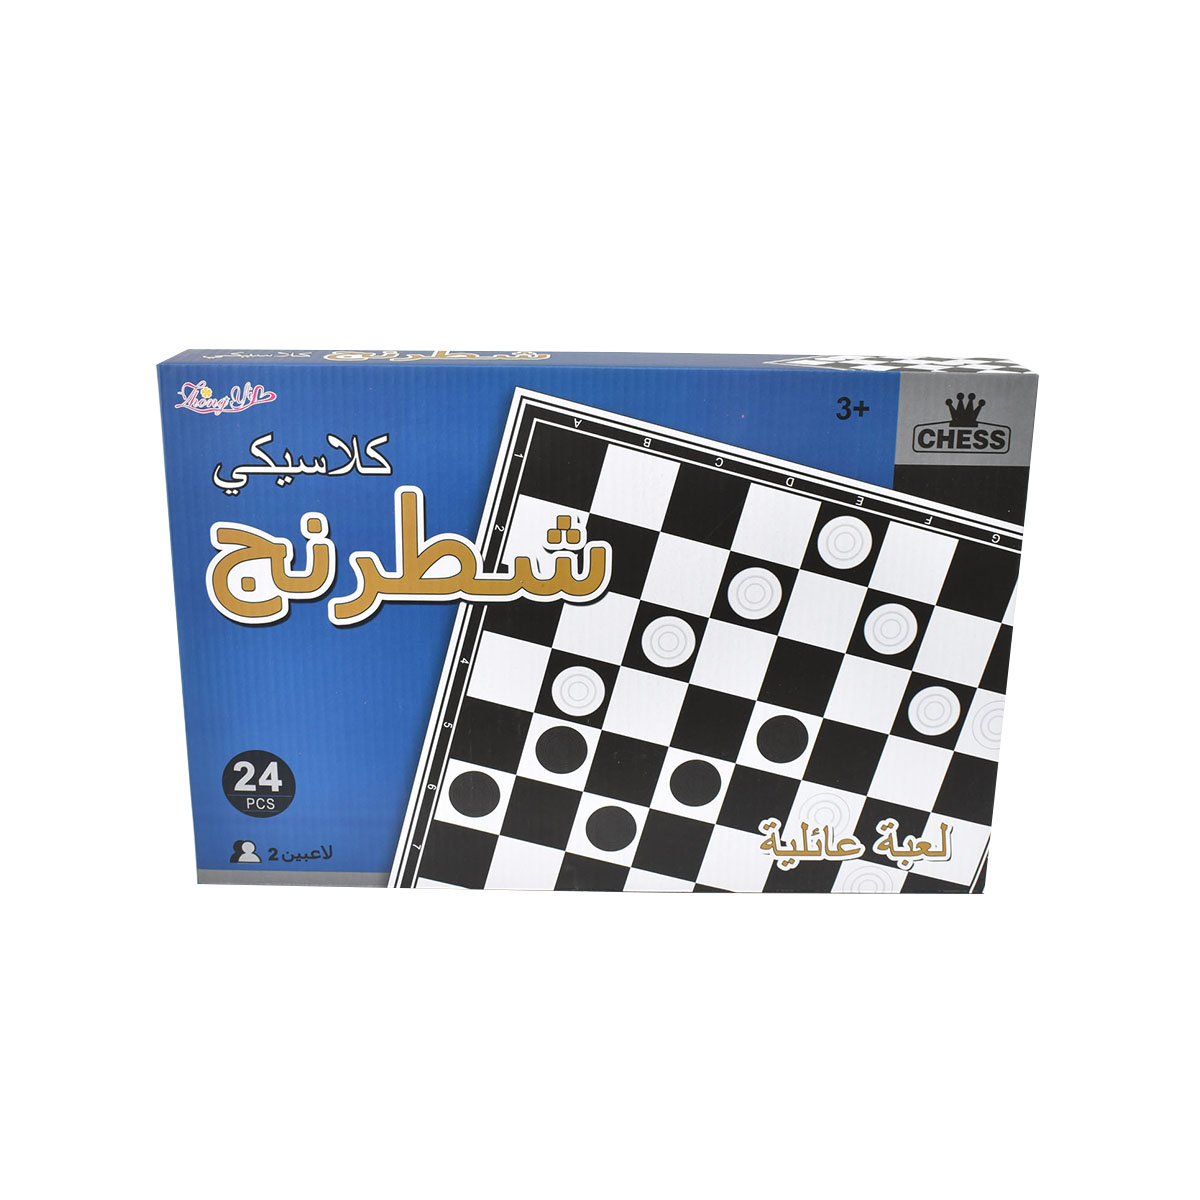 Plastic chess game board 36 x 36 cm 10244